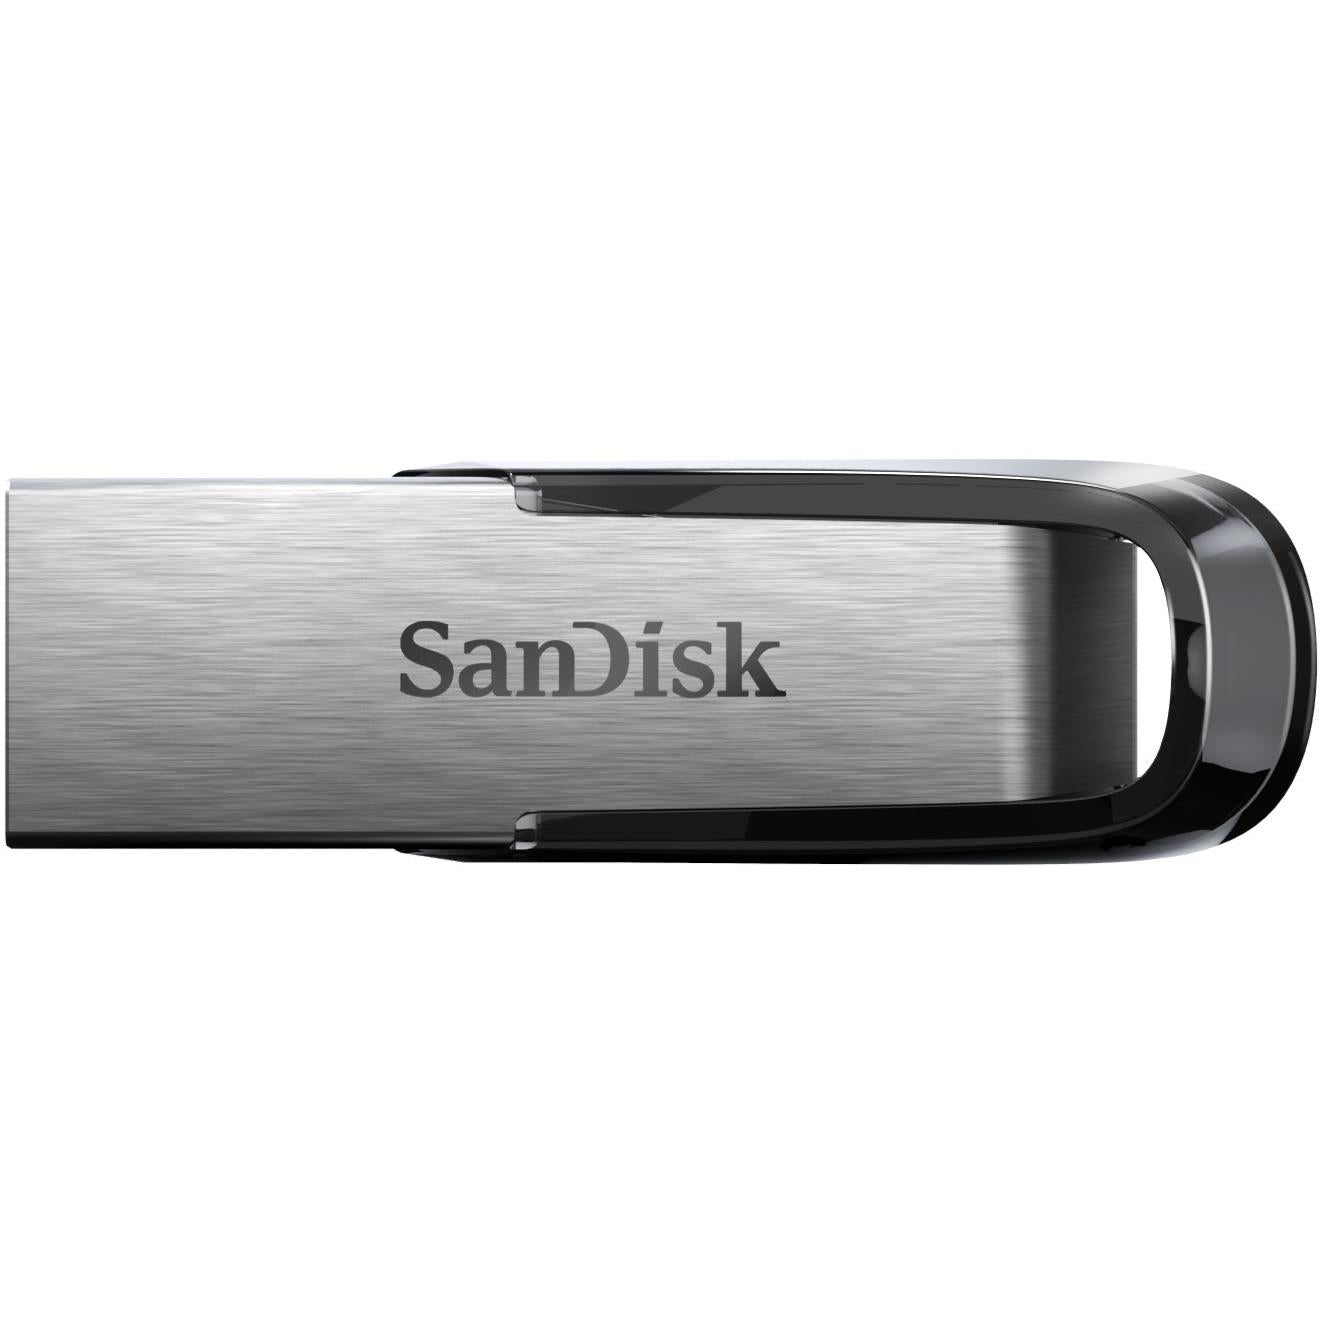 sandisk ultra flair usb 3.0 flash drive (64gb)